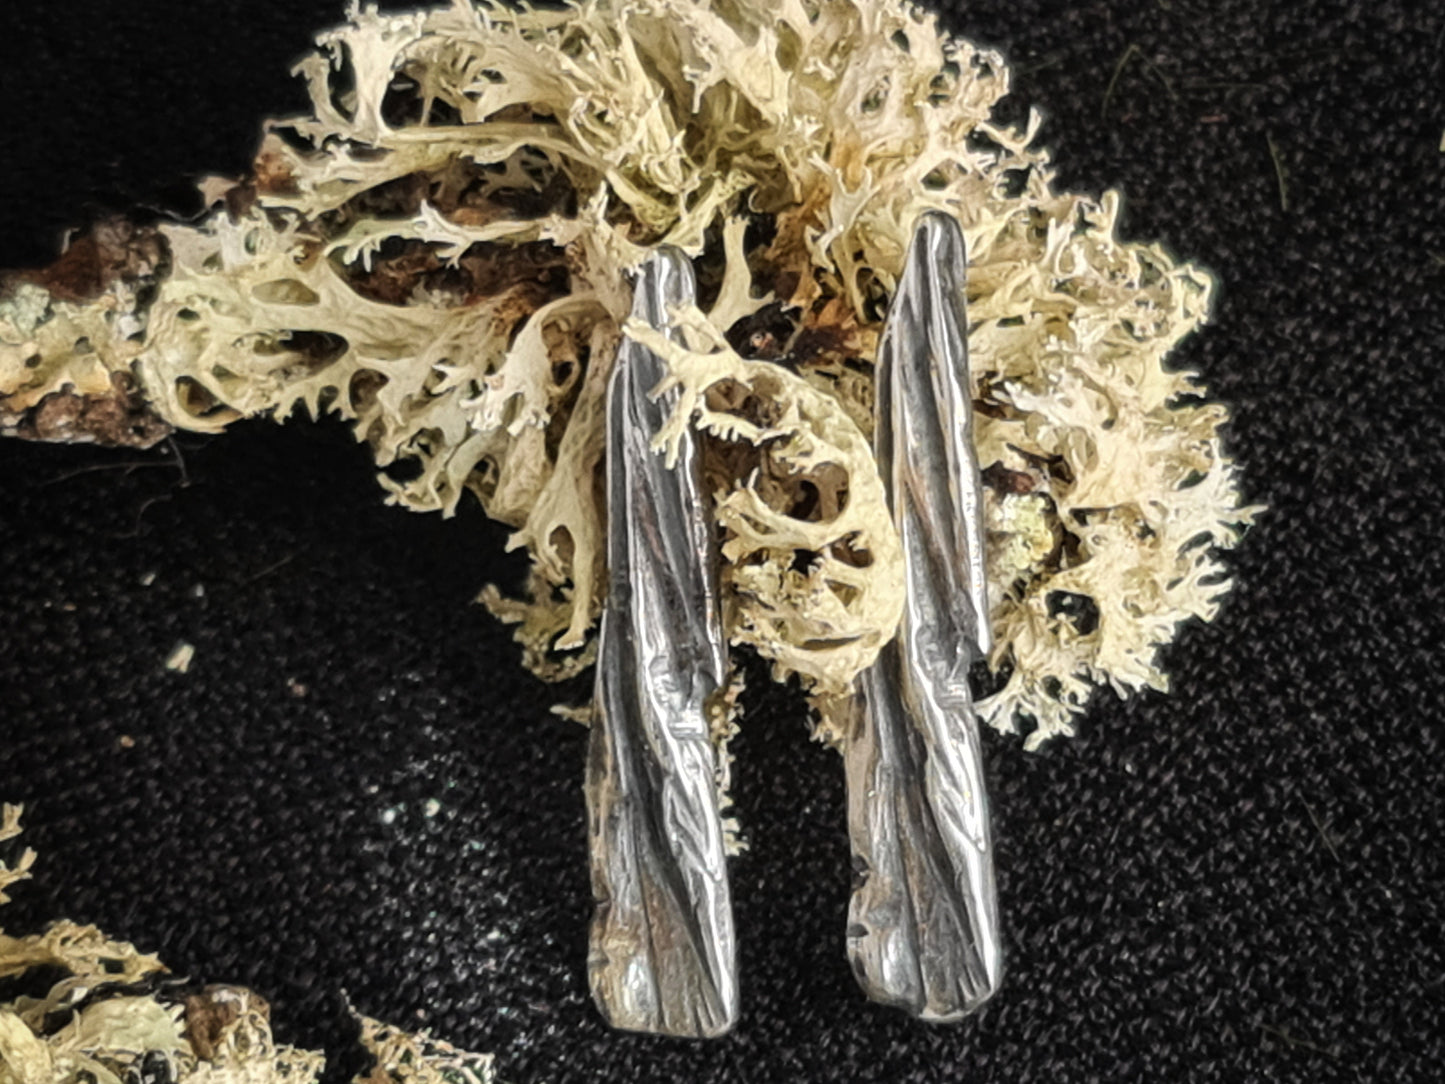 Quarrywood bark polished silver long hang earrings